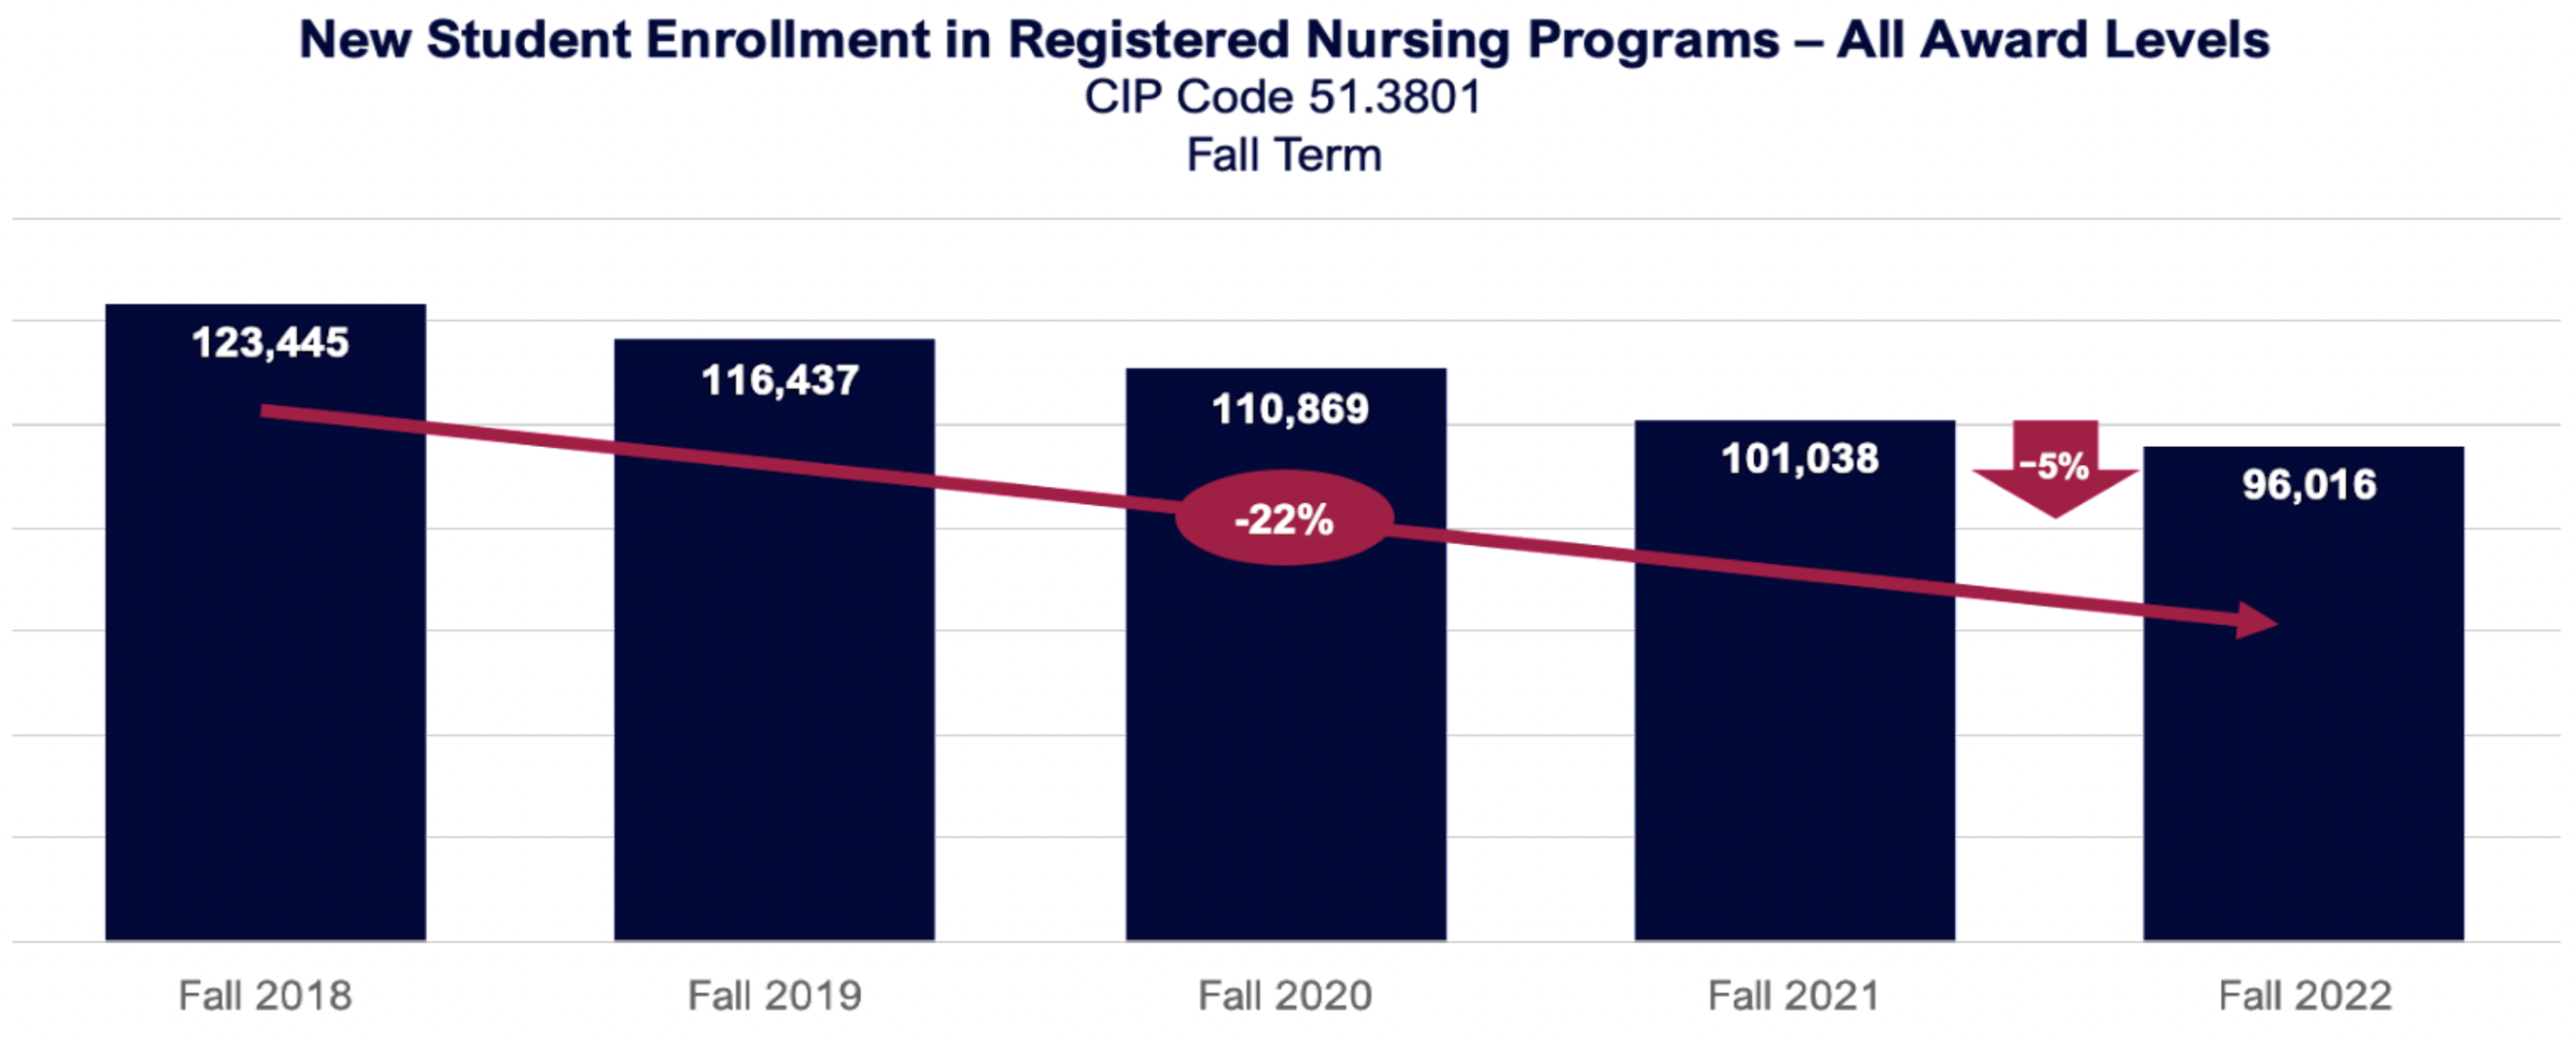 New Student Enrollment in Registered Nursing Programs – All Award Levels (CIP Code 51.3801, Fall Term)